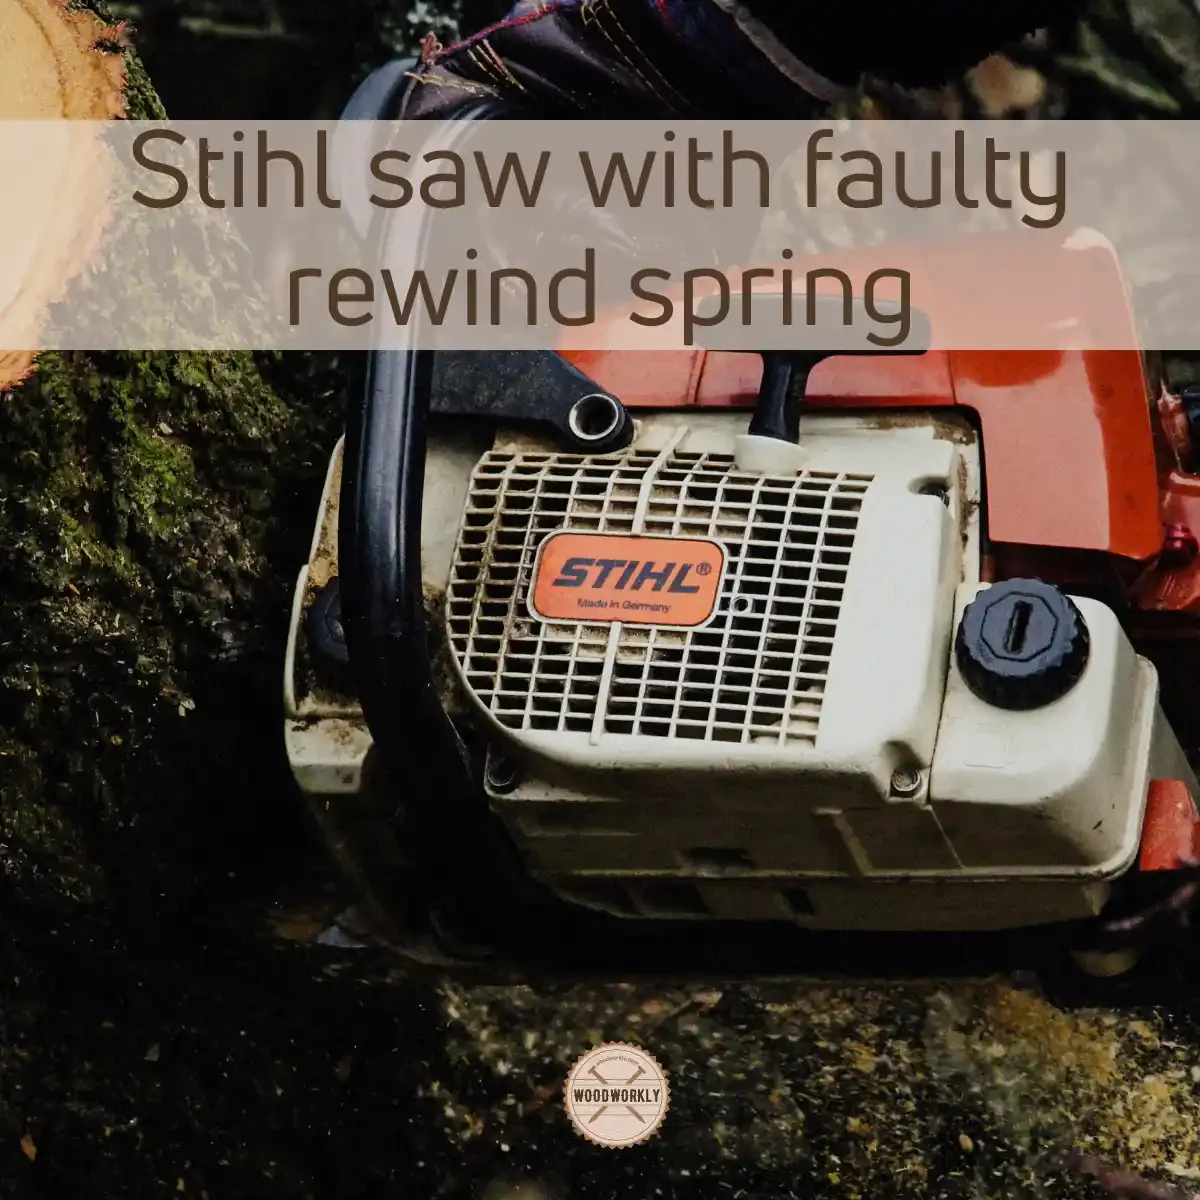 Stihl saw with faulty rewind spring